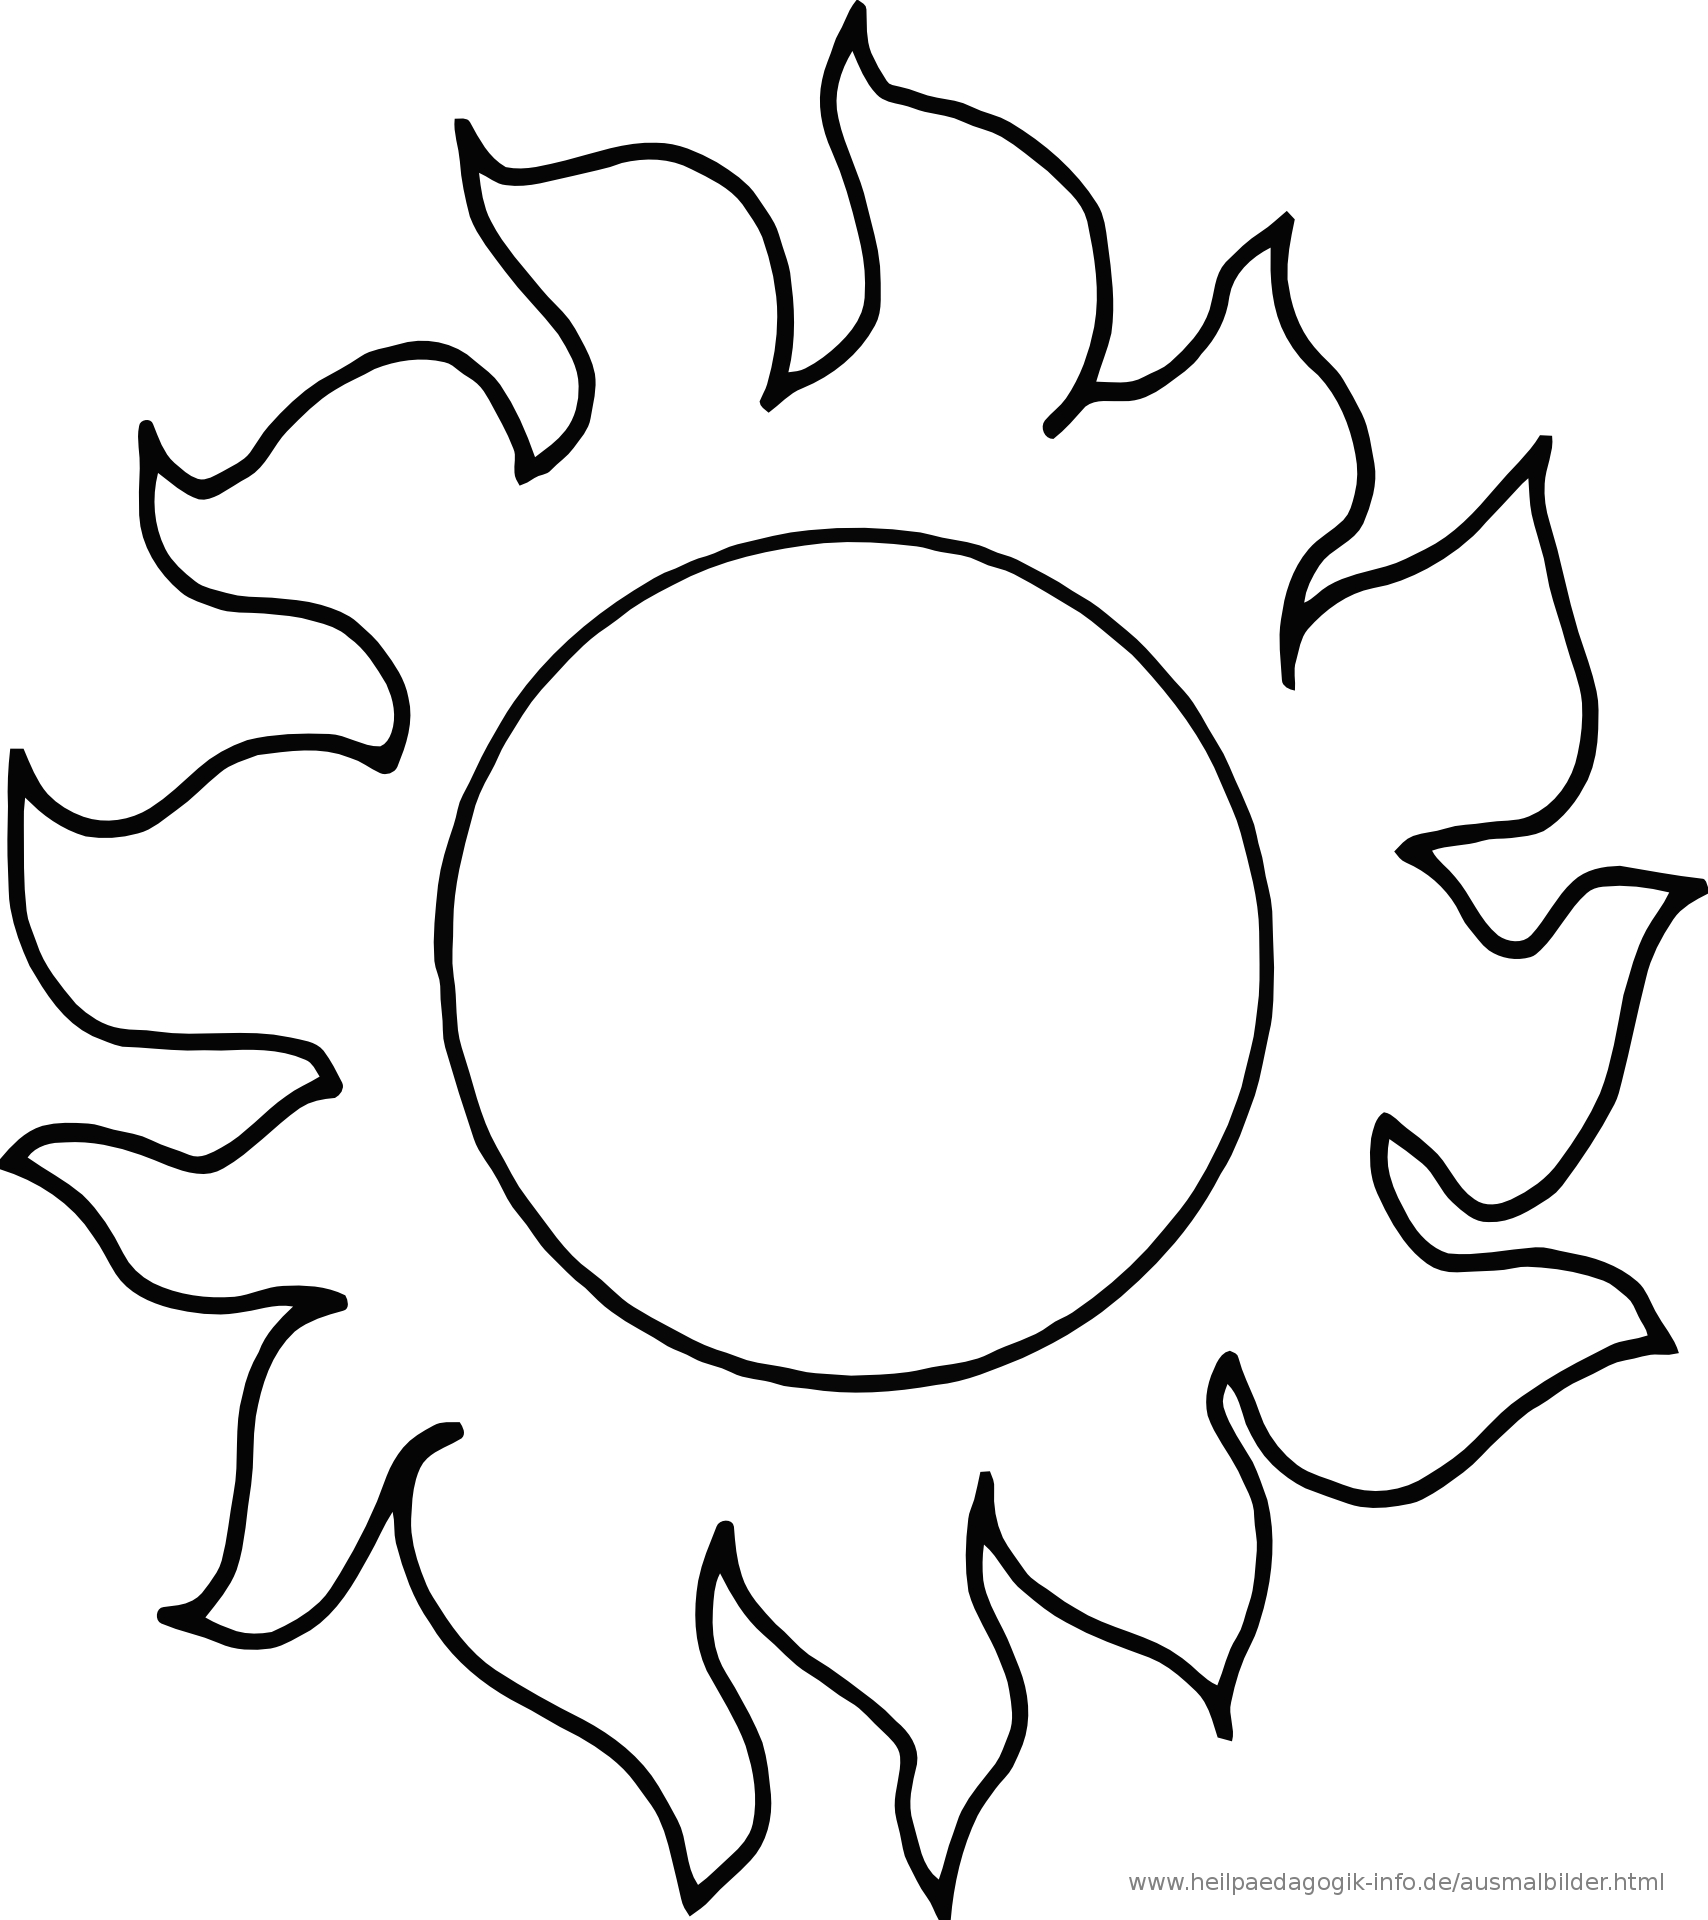 Ausmalbilder Sonne in Malvorlagen Sonne